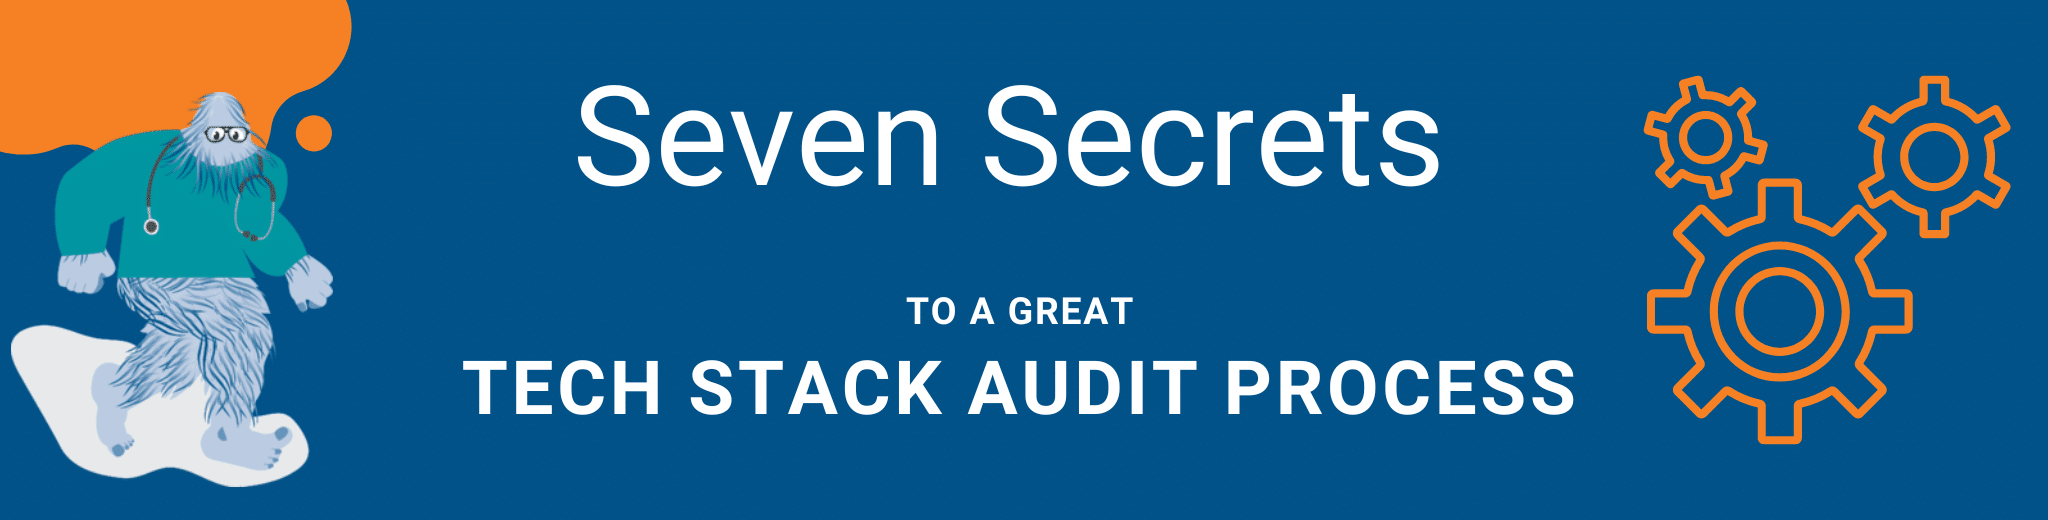 Tech stack audit process